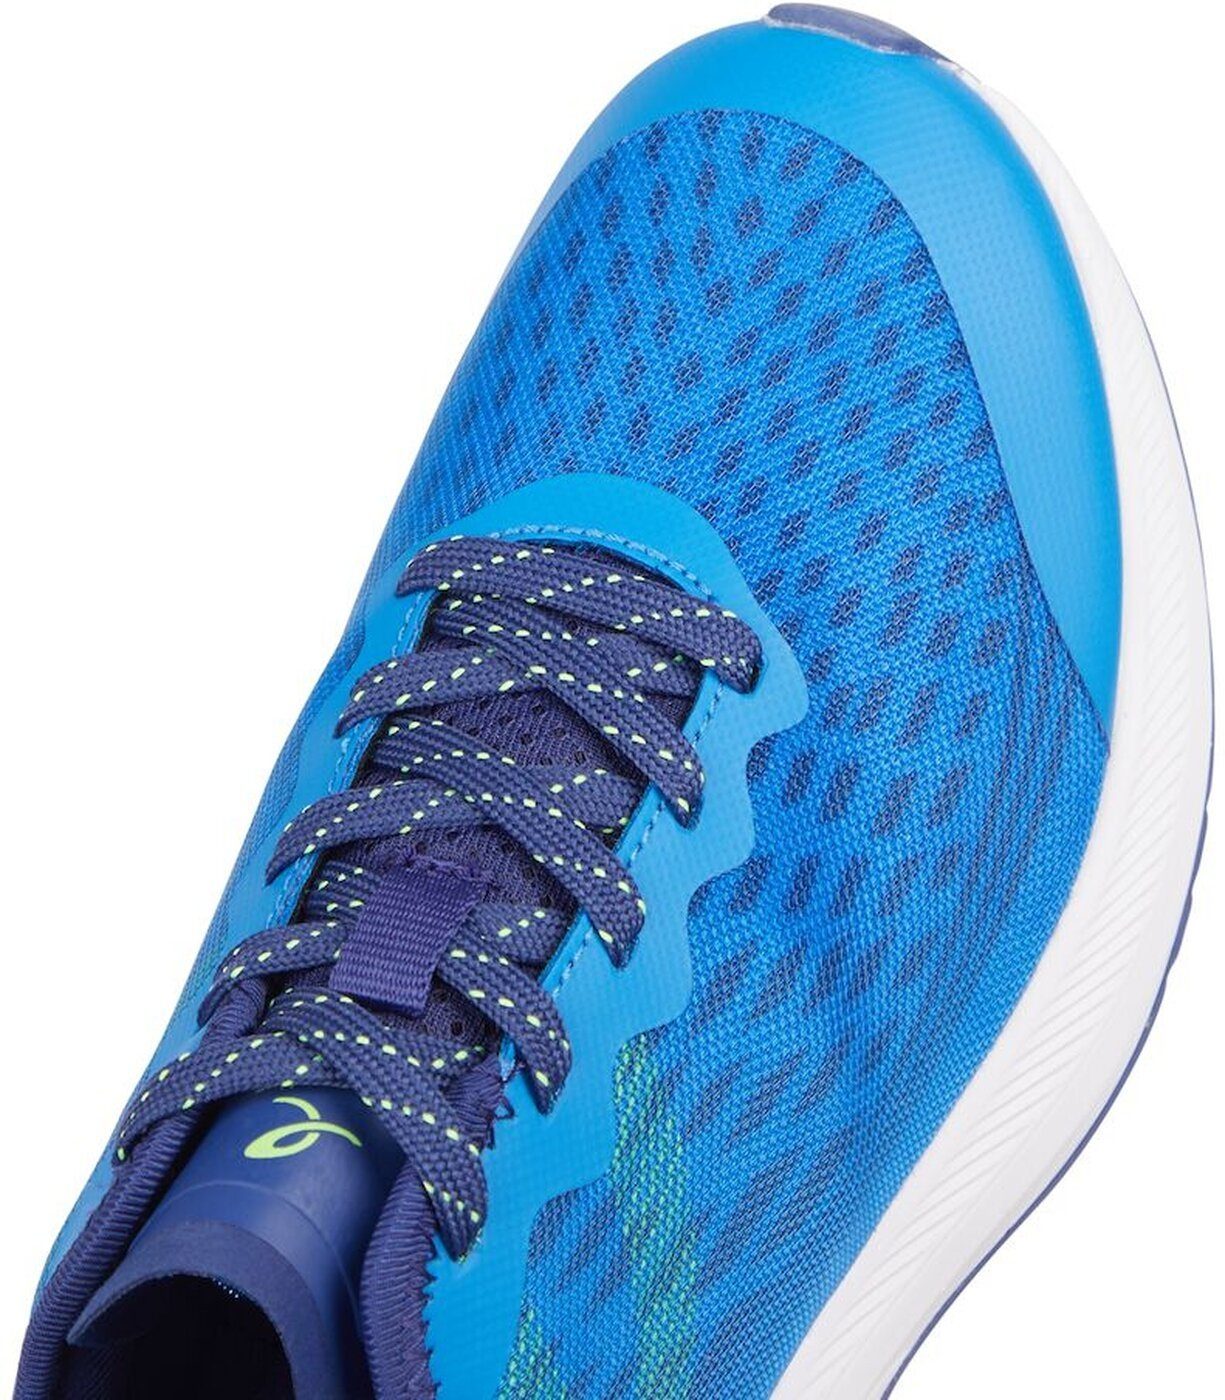 ROYAL/BLUE Ki.-Running-Schuh J 900 OZ Energetics 2.4 BLUE DARK Laufschuh